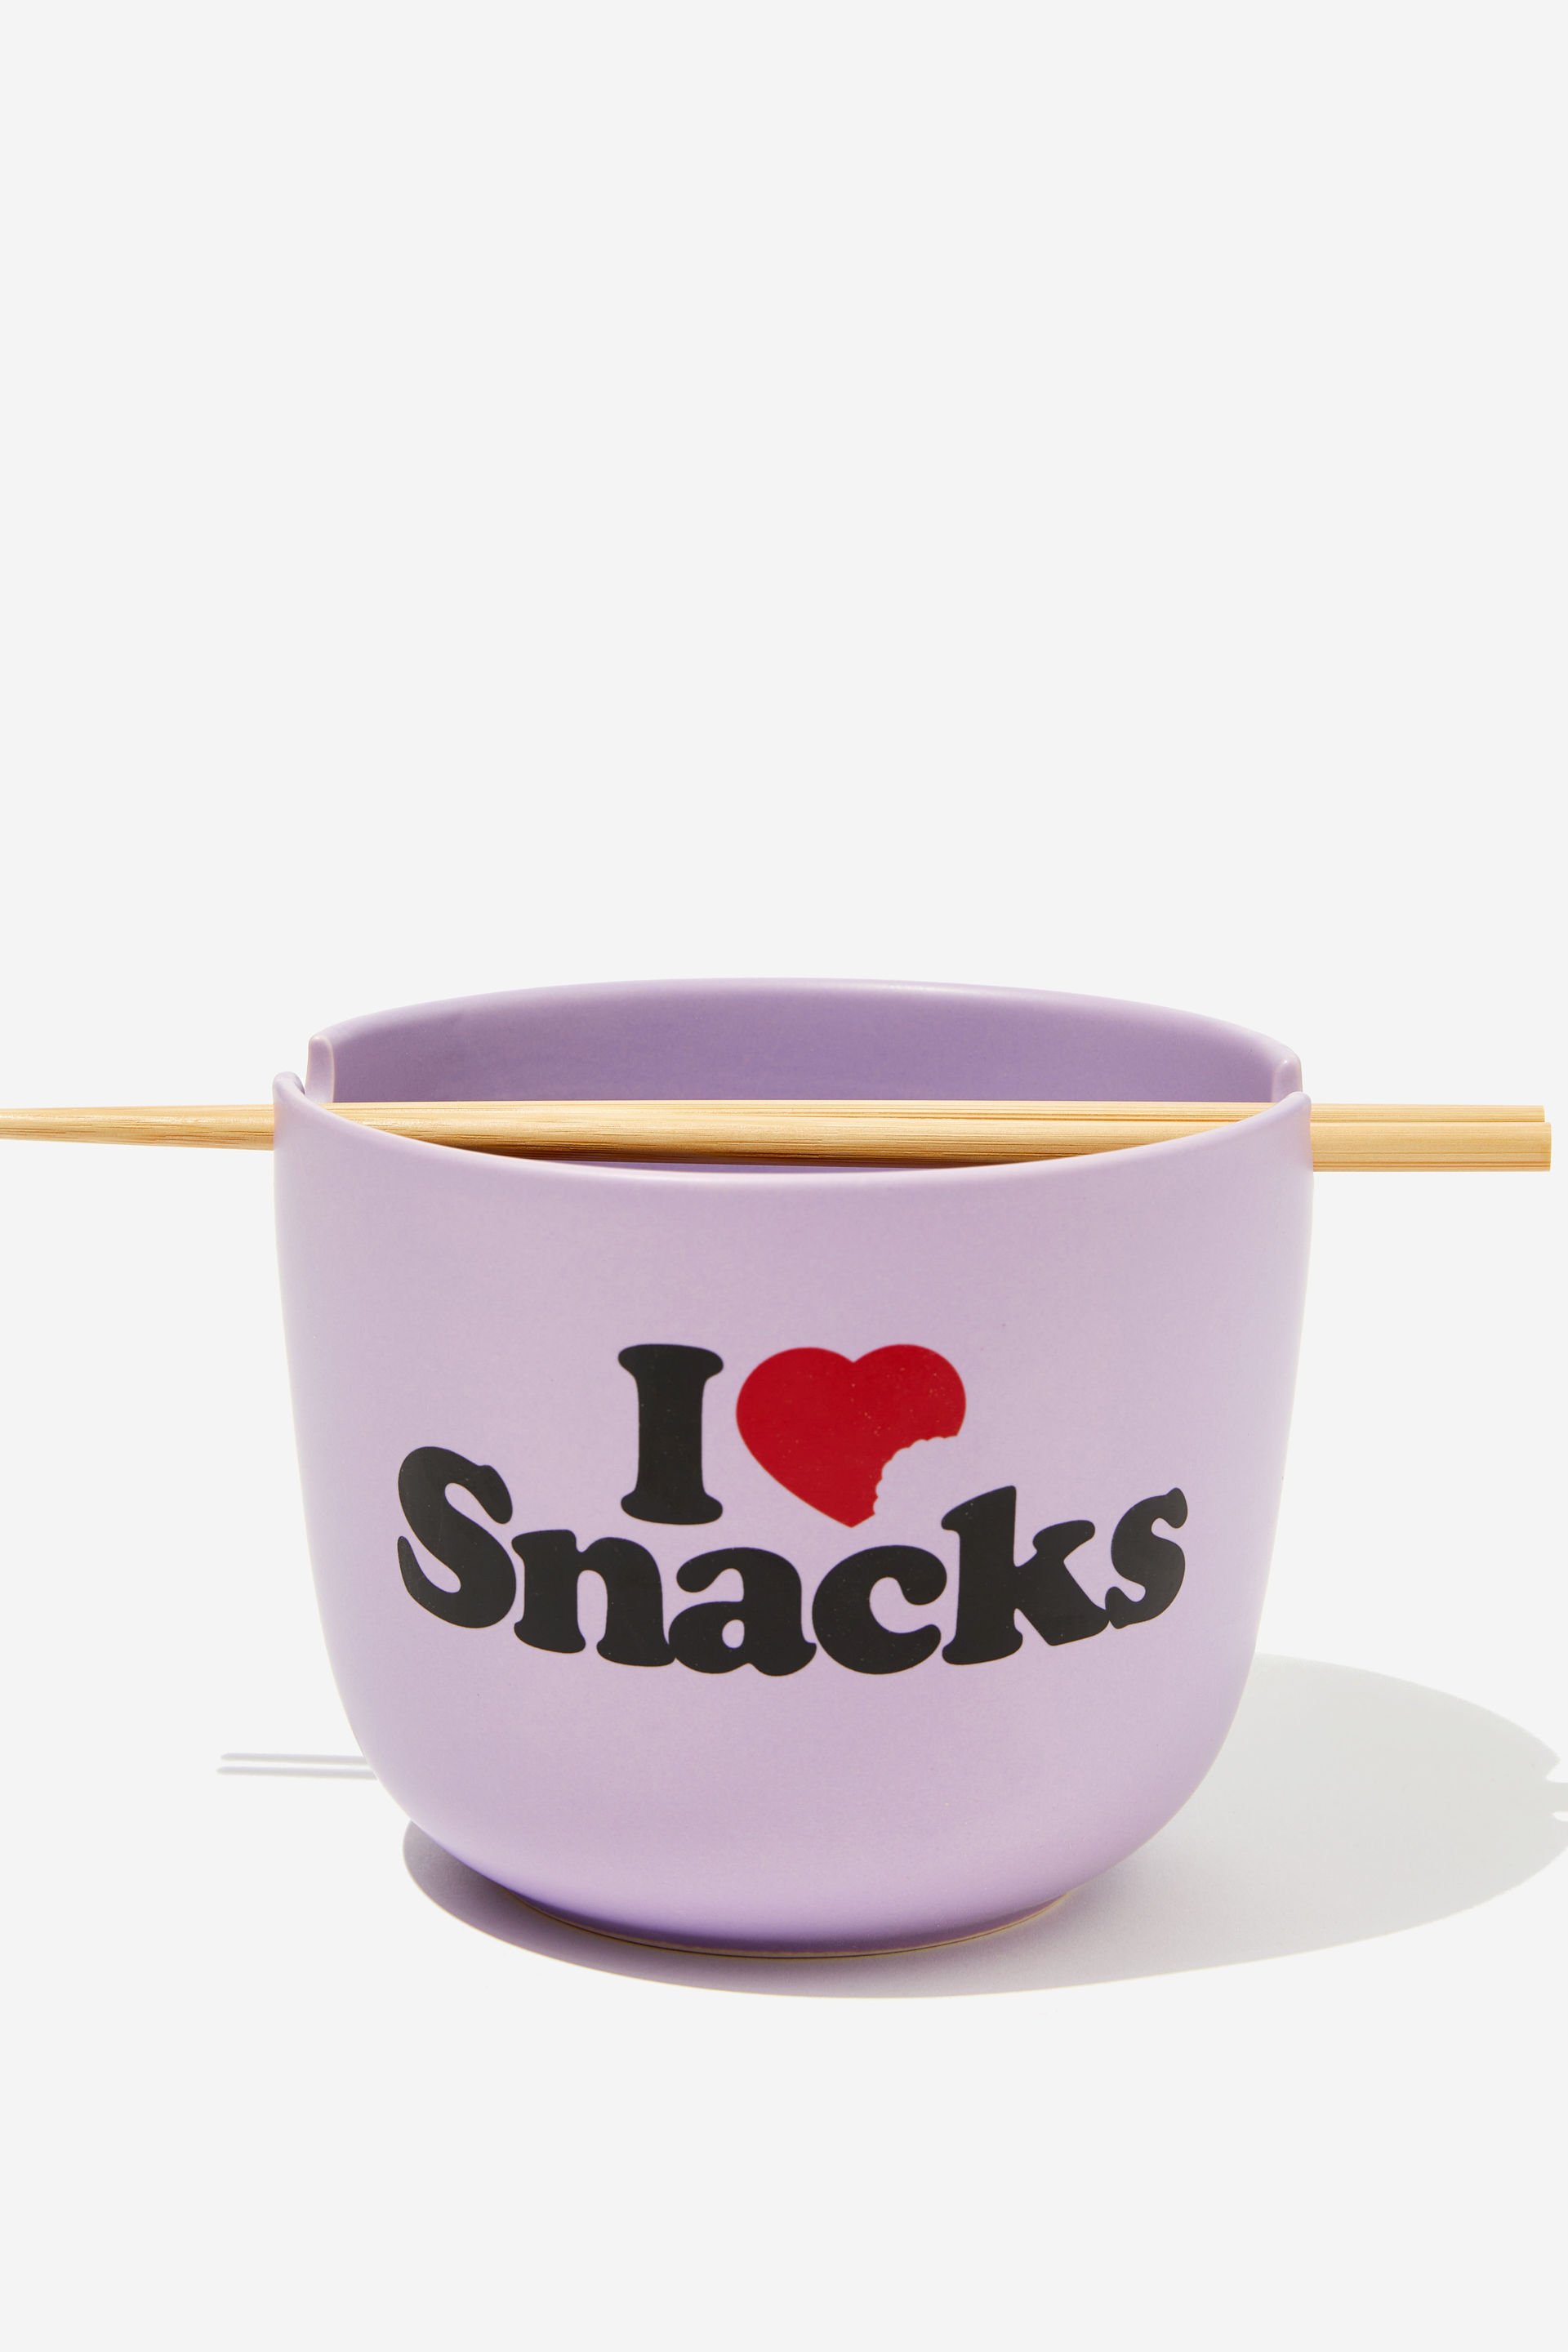 Typo - Feed Me Bowl - I heart snacks lilac